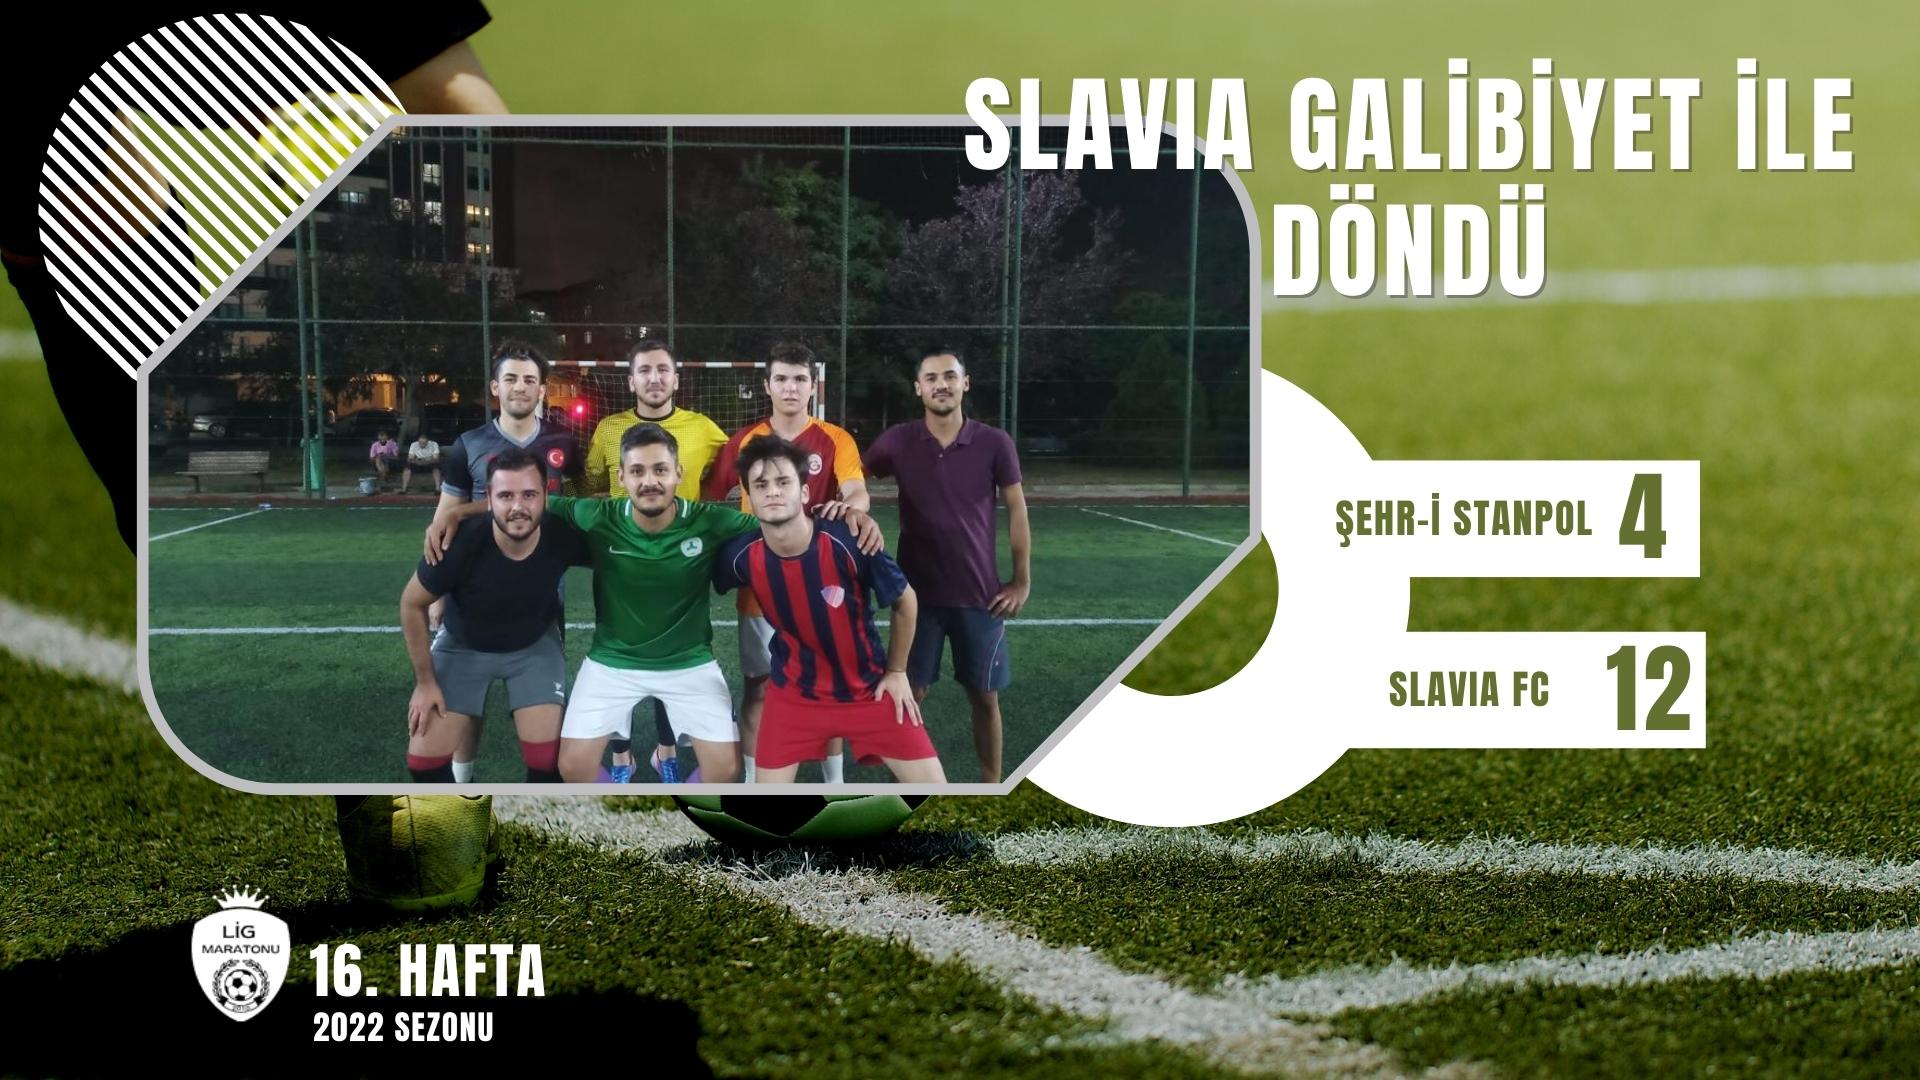 SLAVIA FC GOLLER LE ARPTI